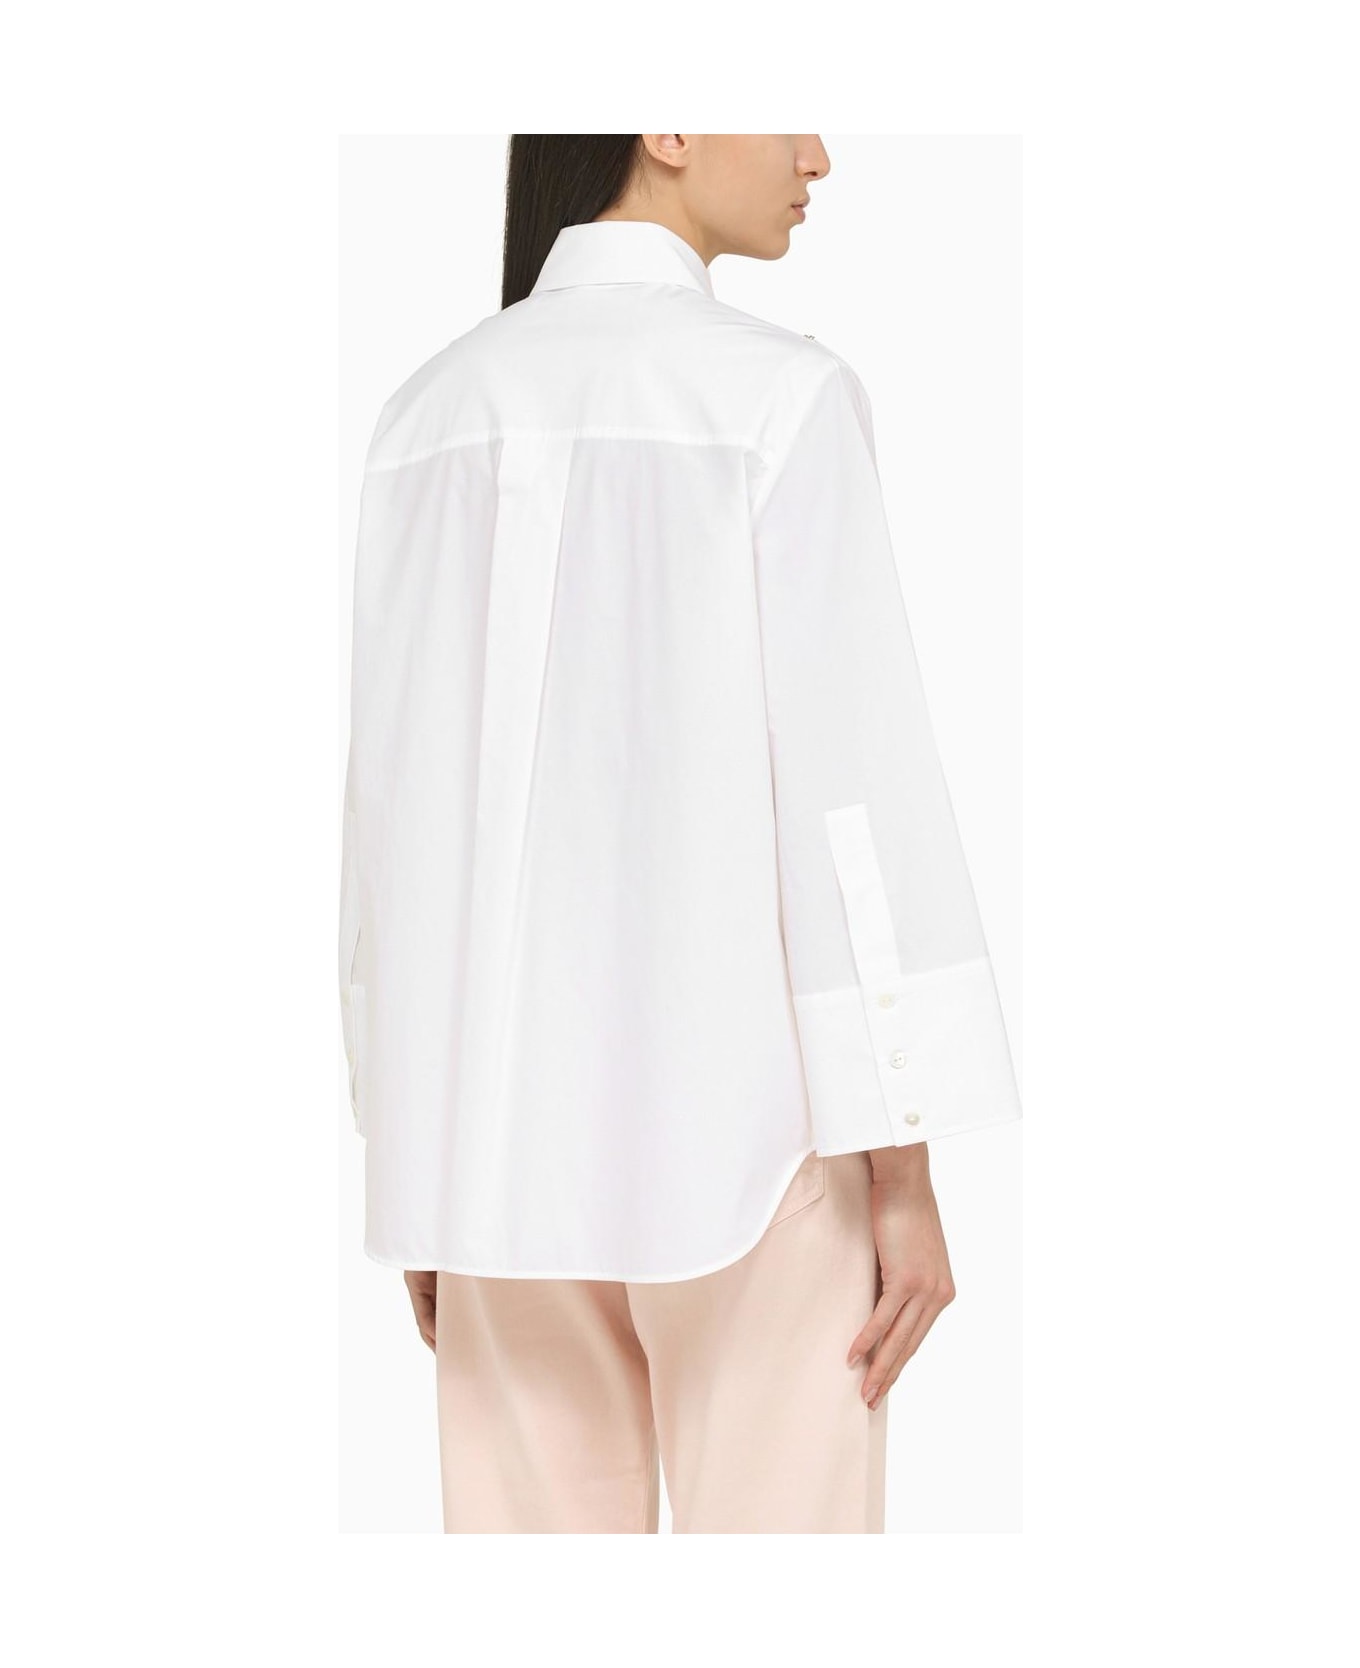 Parosh Embellished Shirt - White